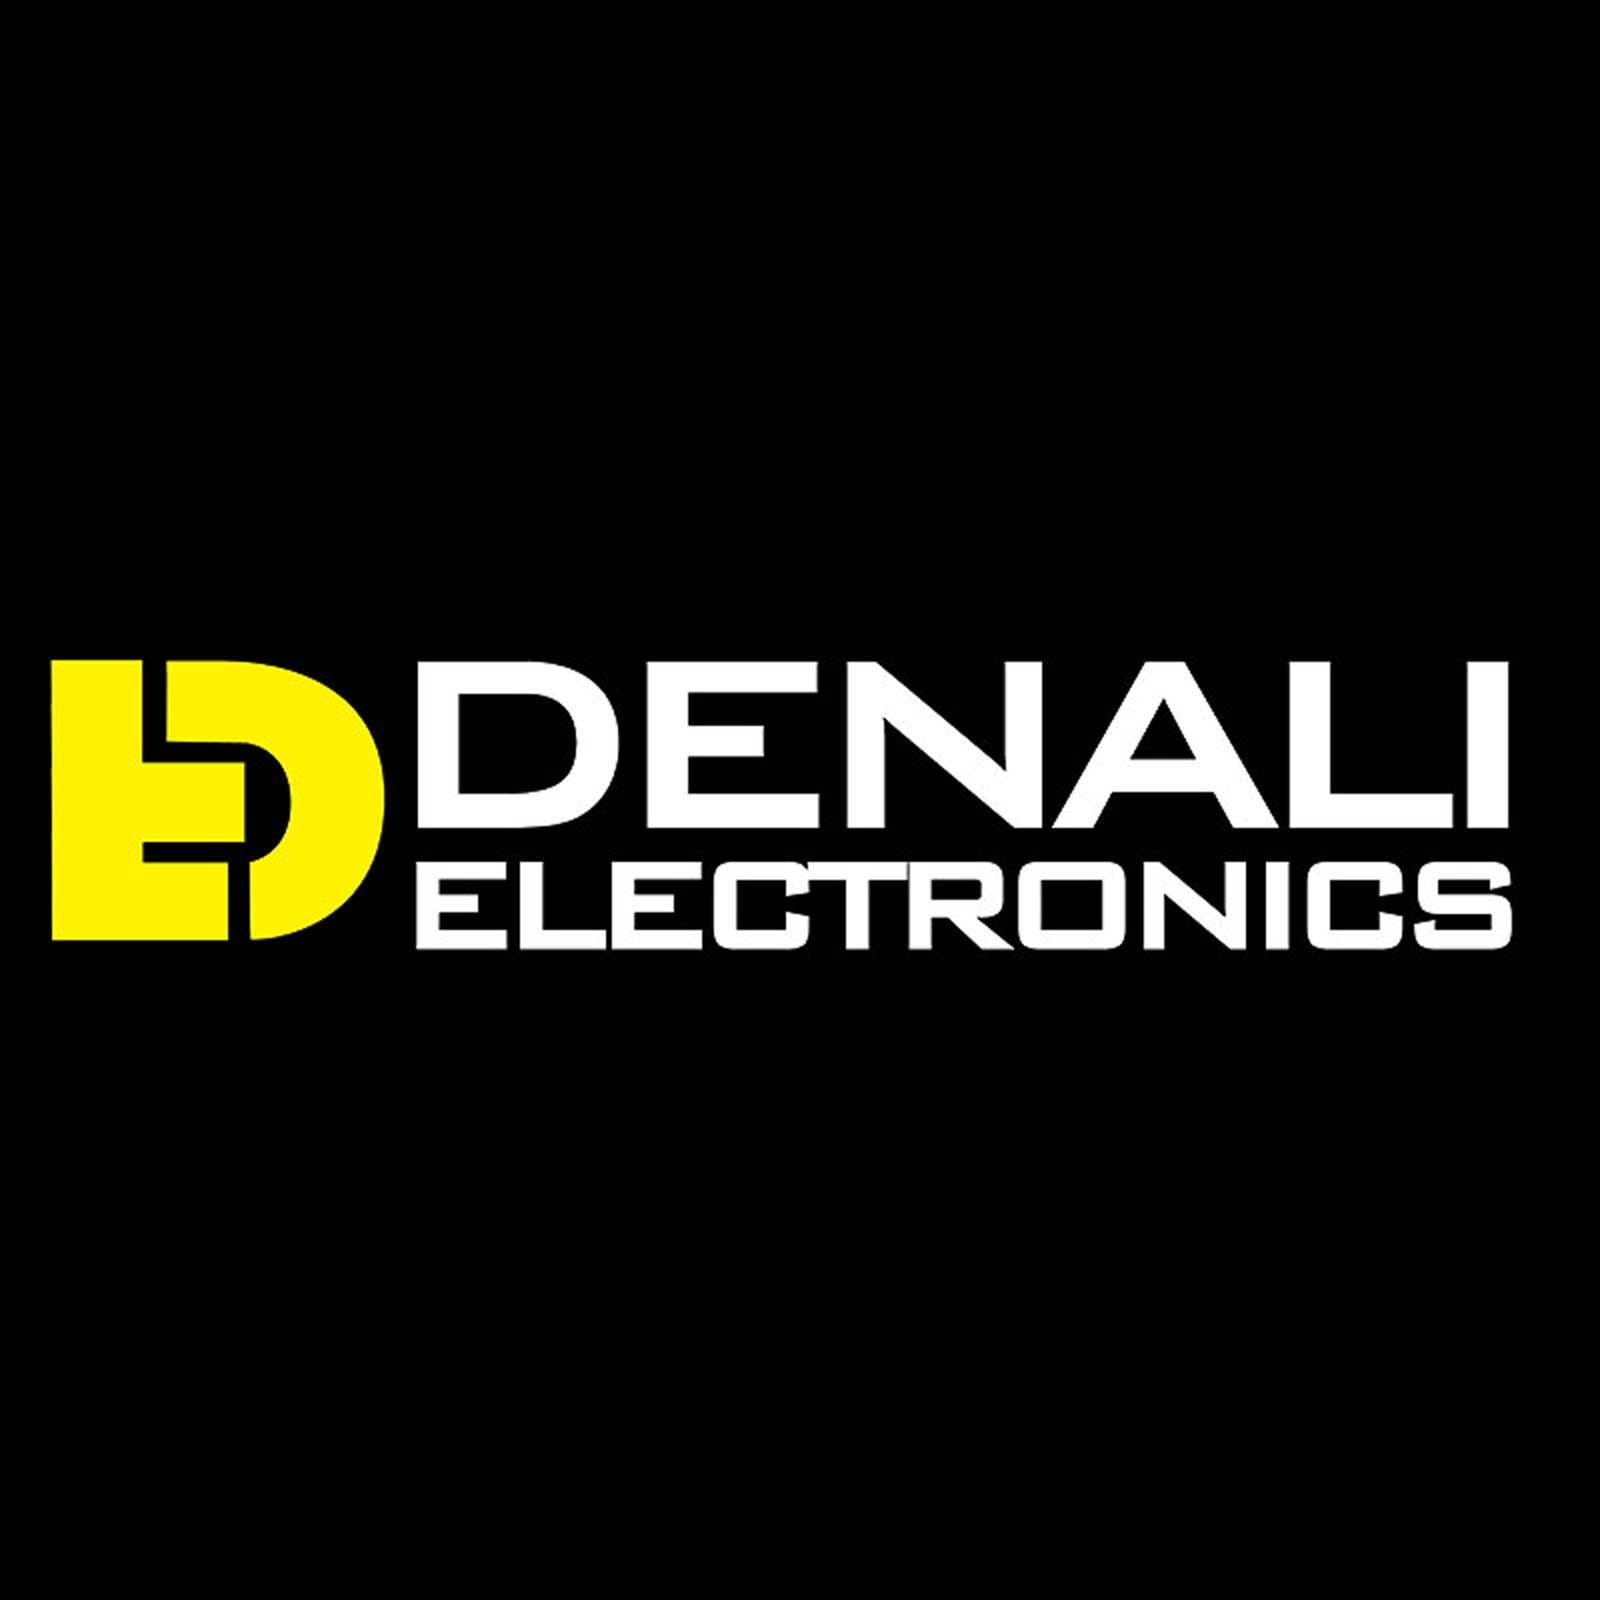 New DENALI Dual Dr1 Headlight Mount Brkt Tri Bonne/T100 Asstd #DELAH1110200